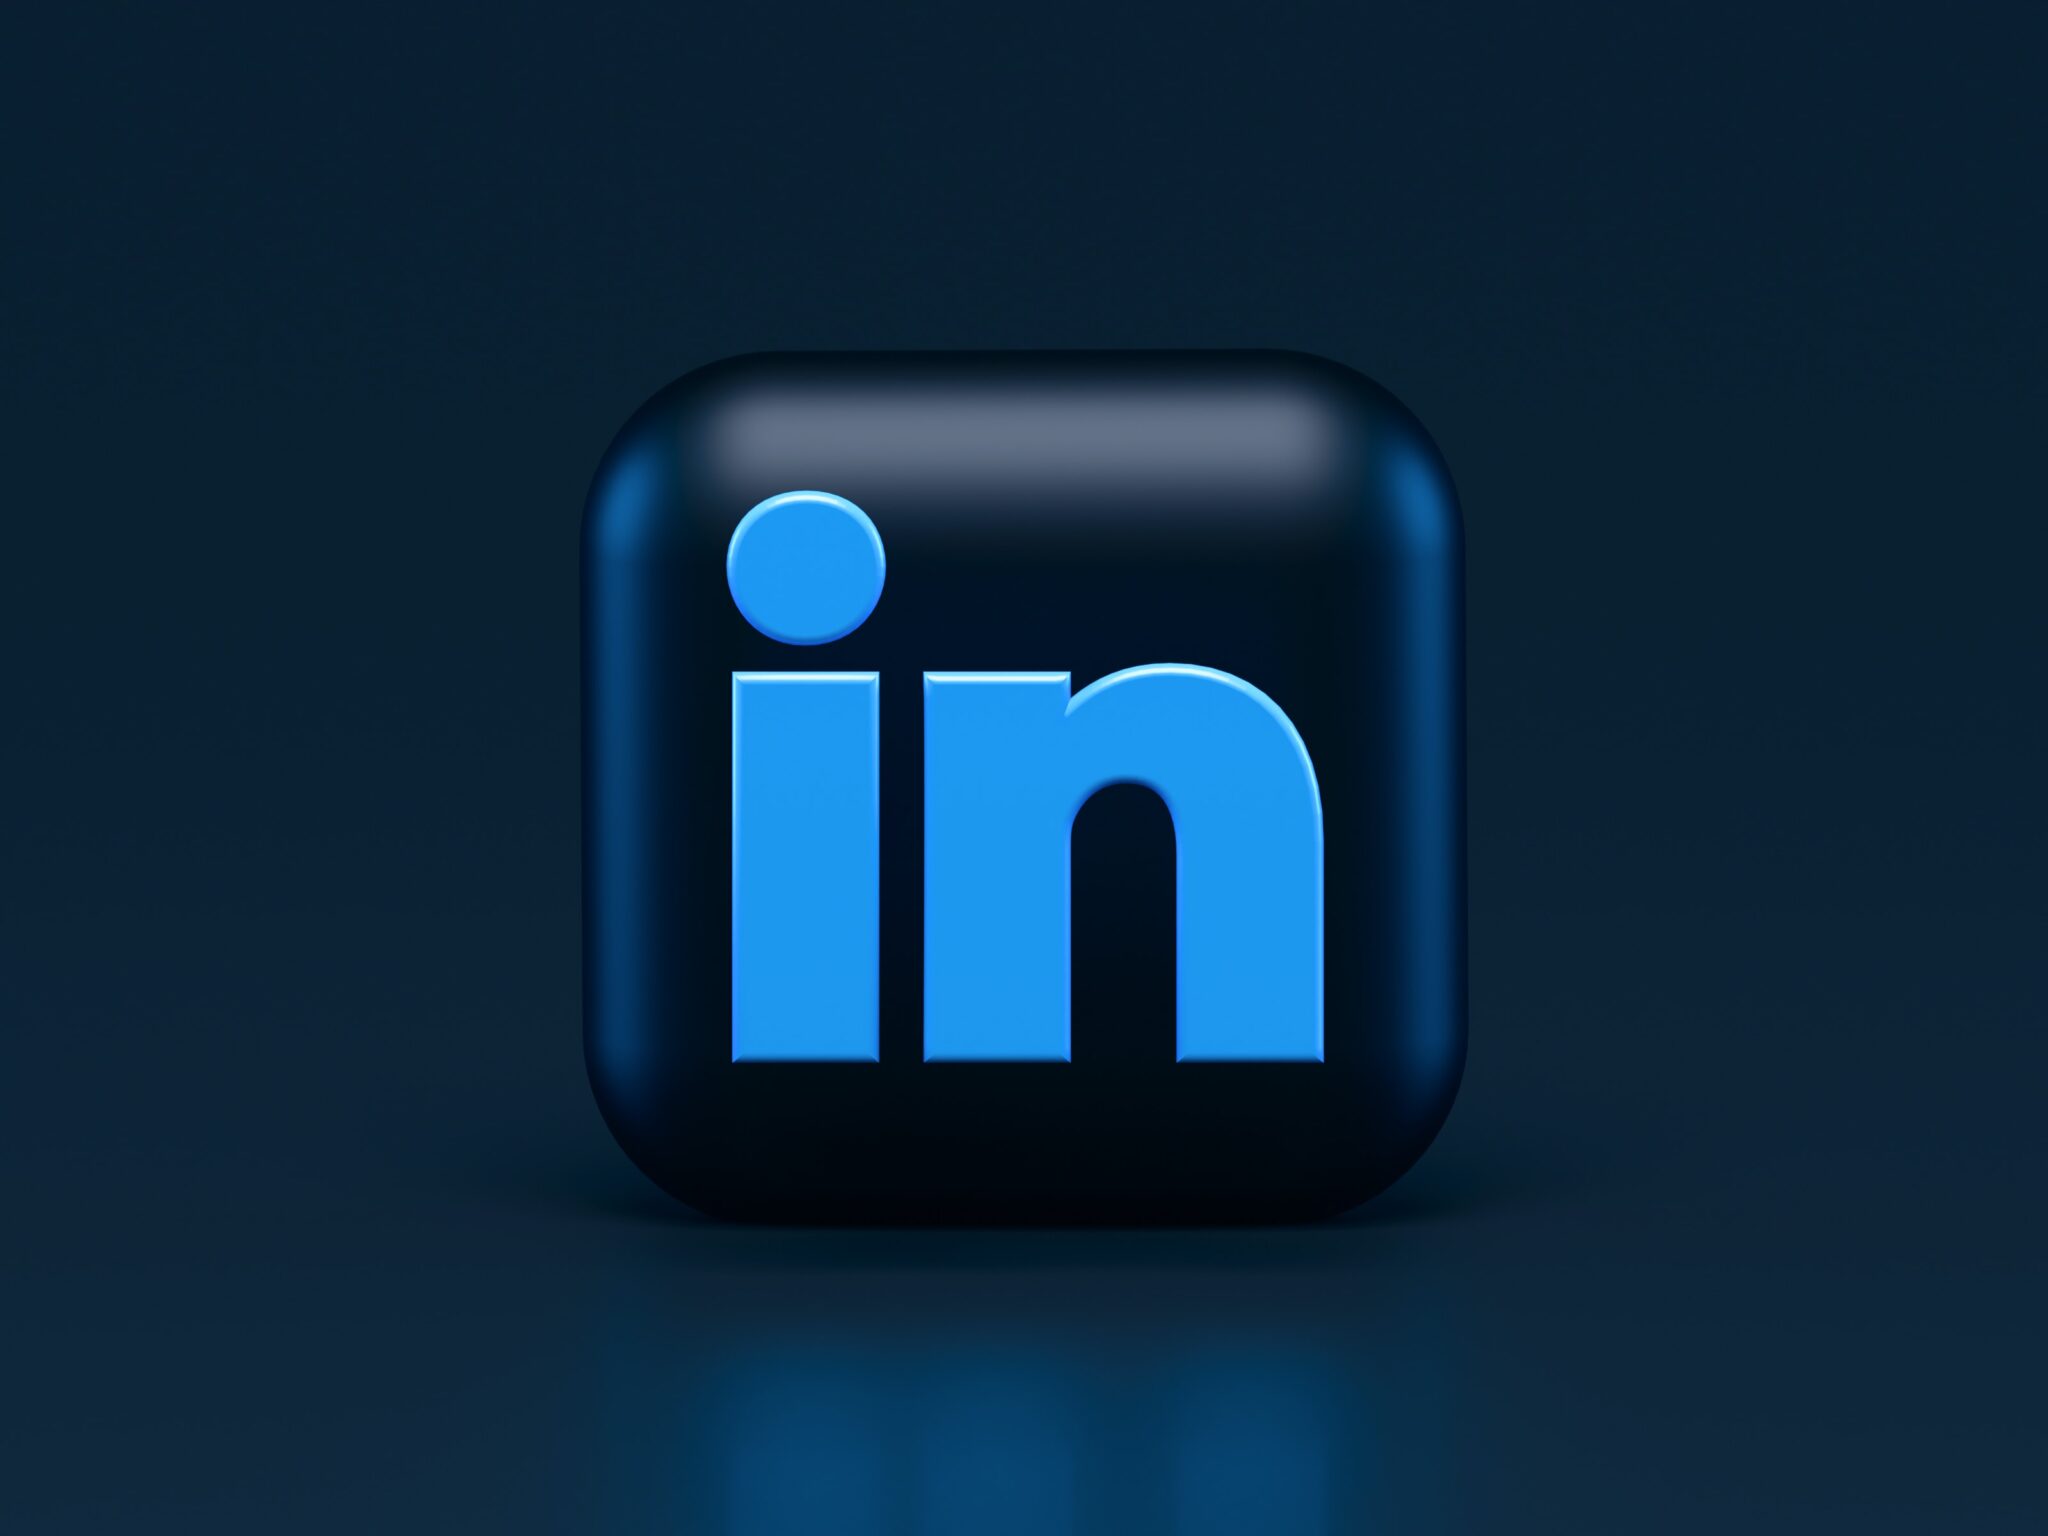 LinkedIn marketing logo representing company pages